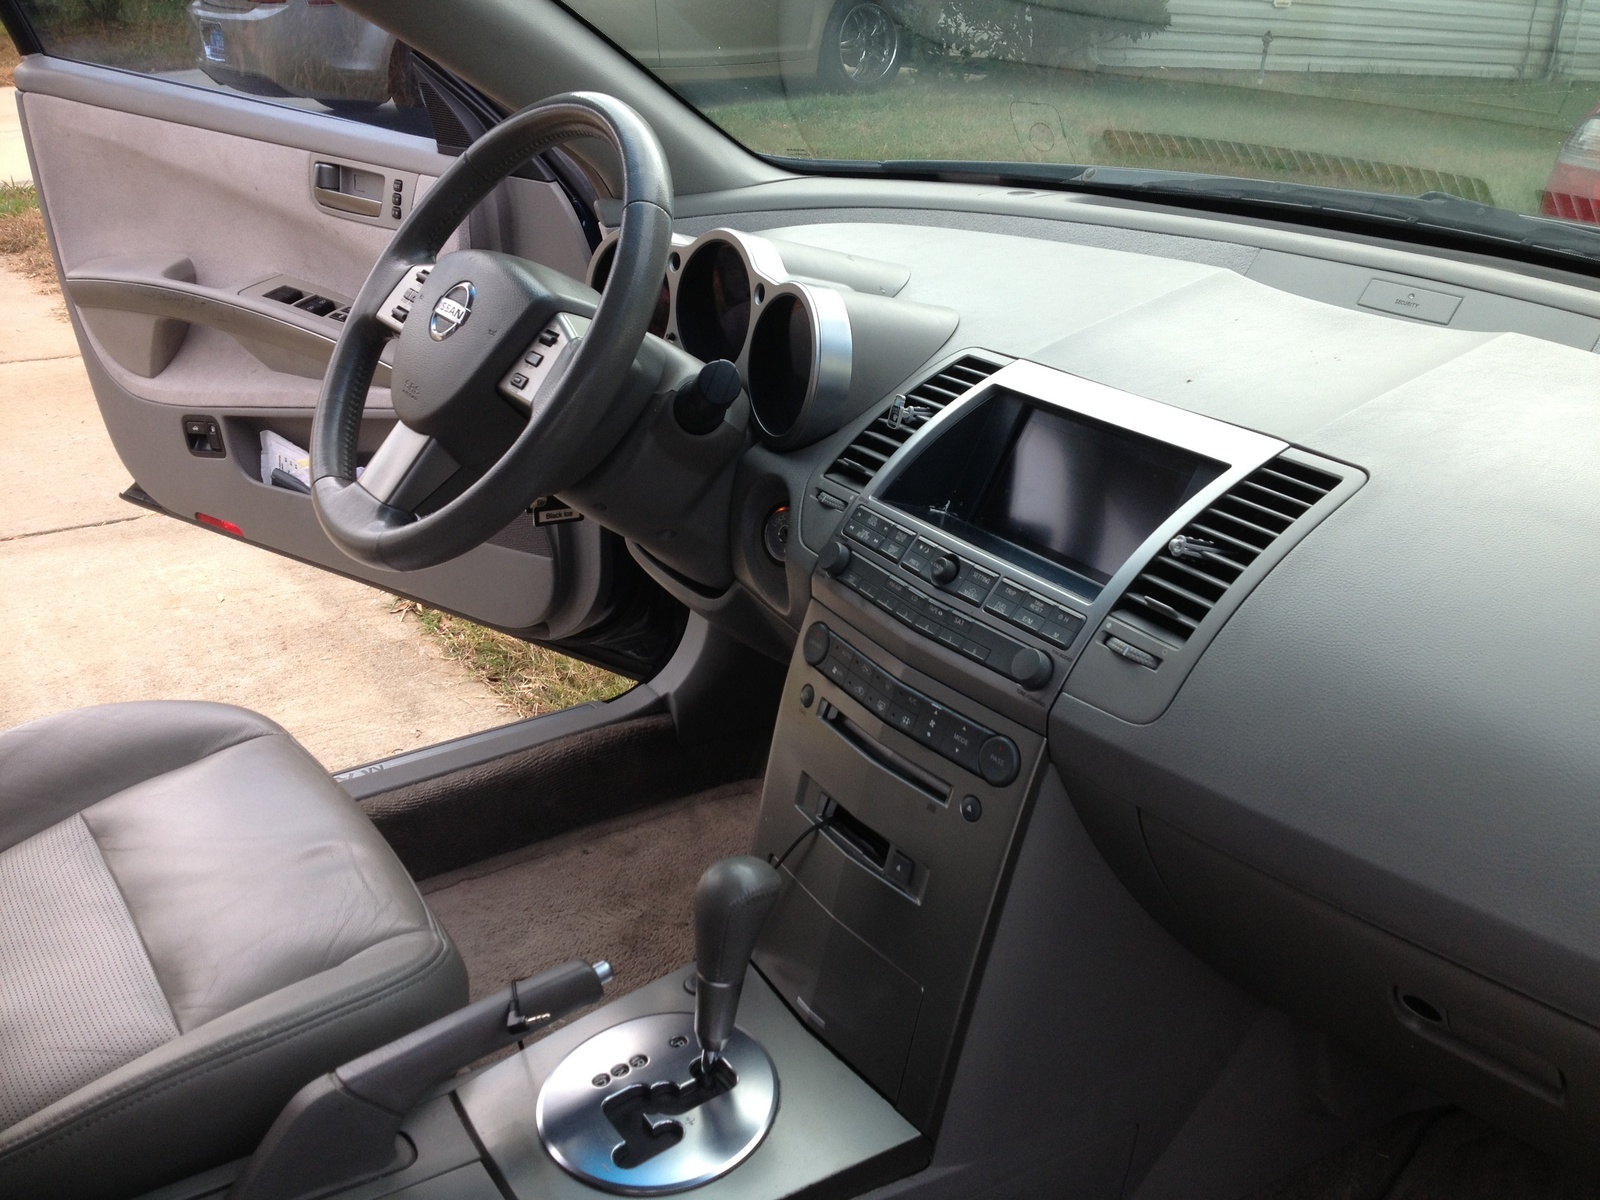 2004 Nissan maxima custom interior